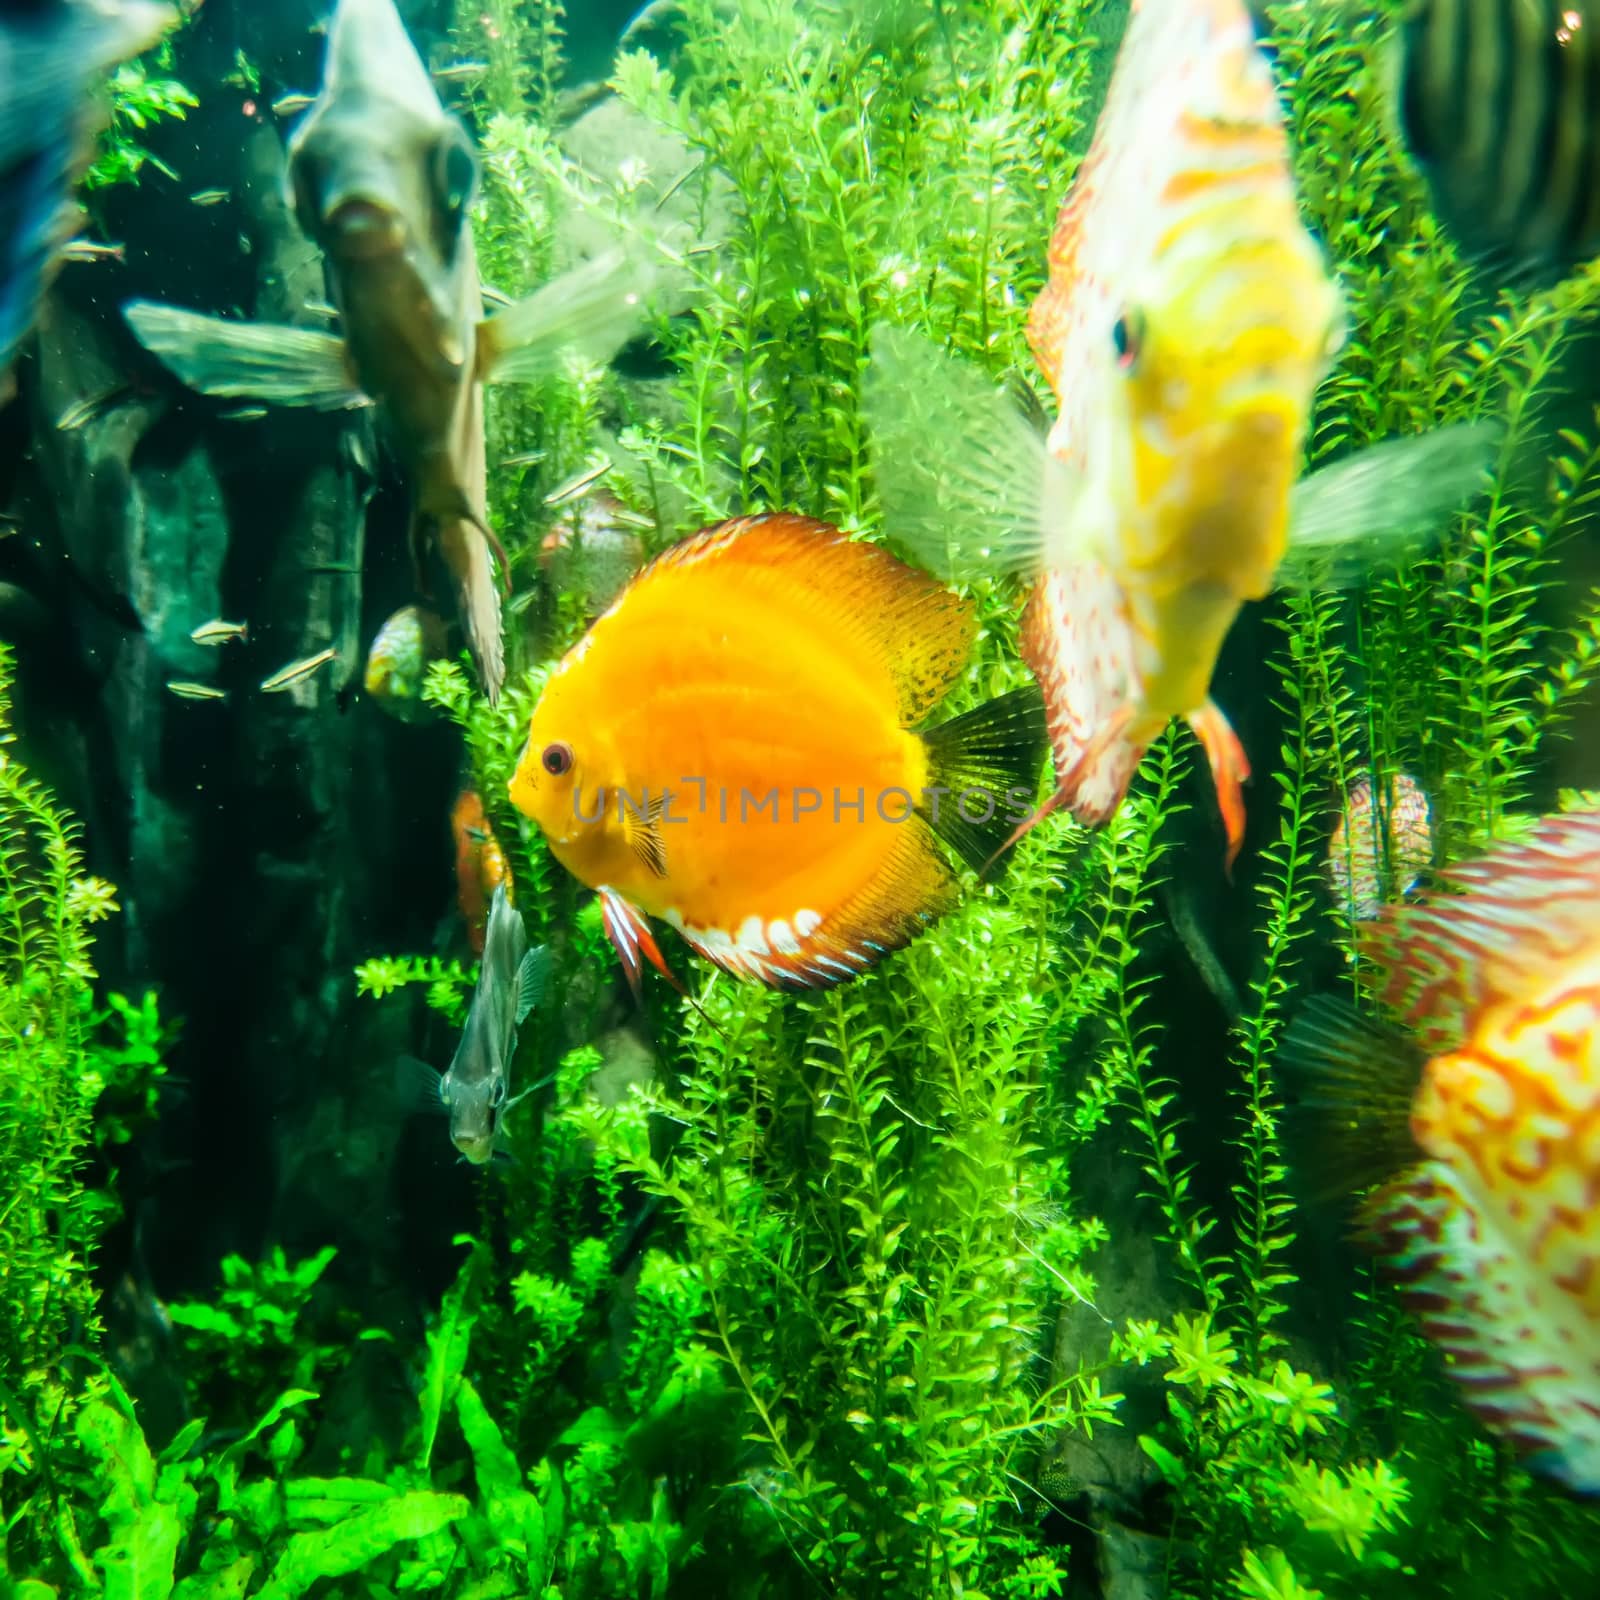 salt water fish in the ocean or aquarium by digidreamgrafix